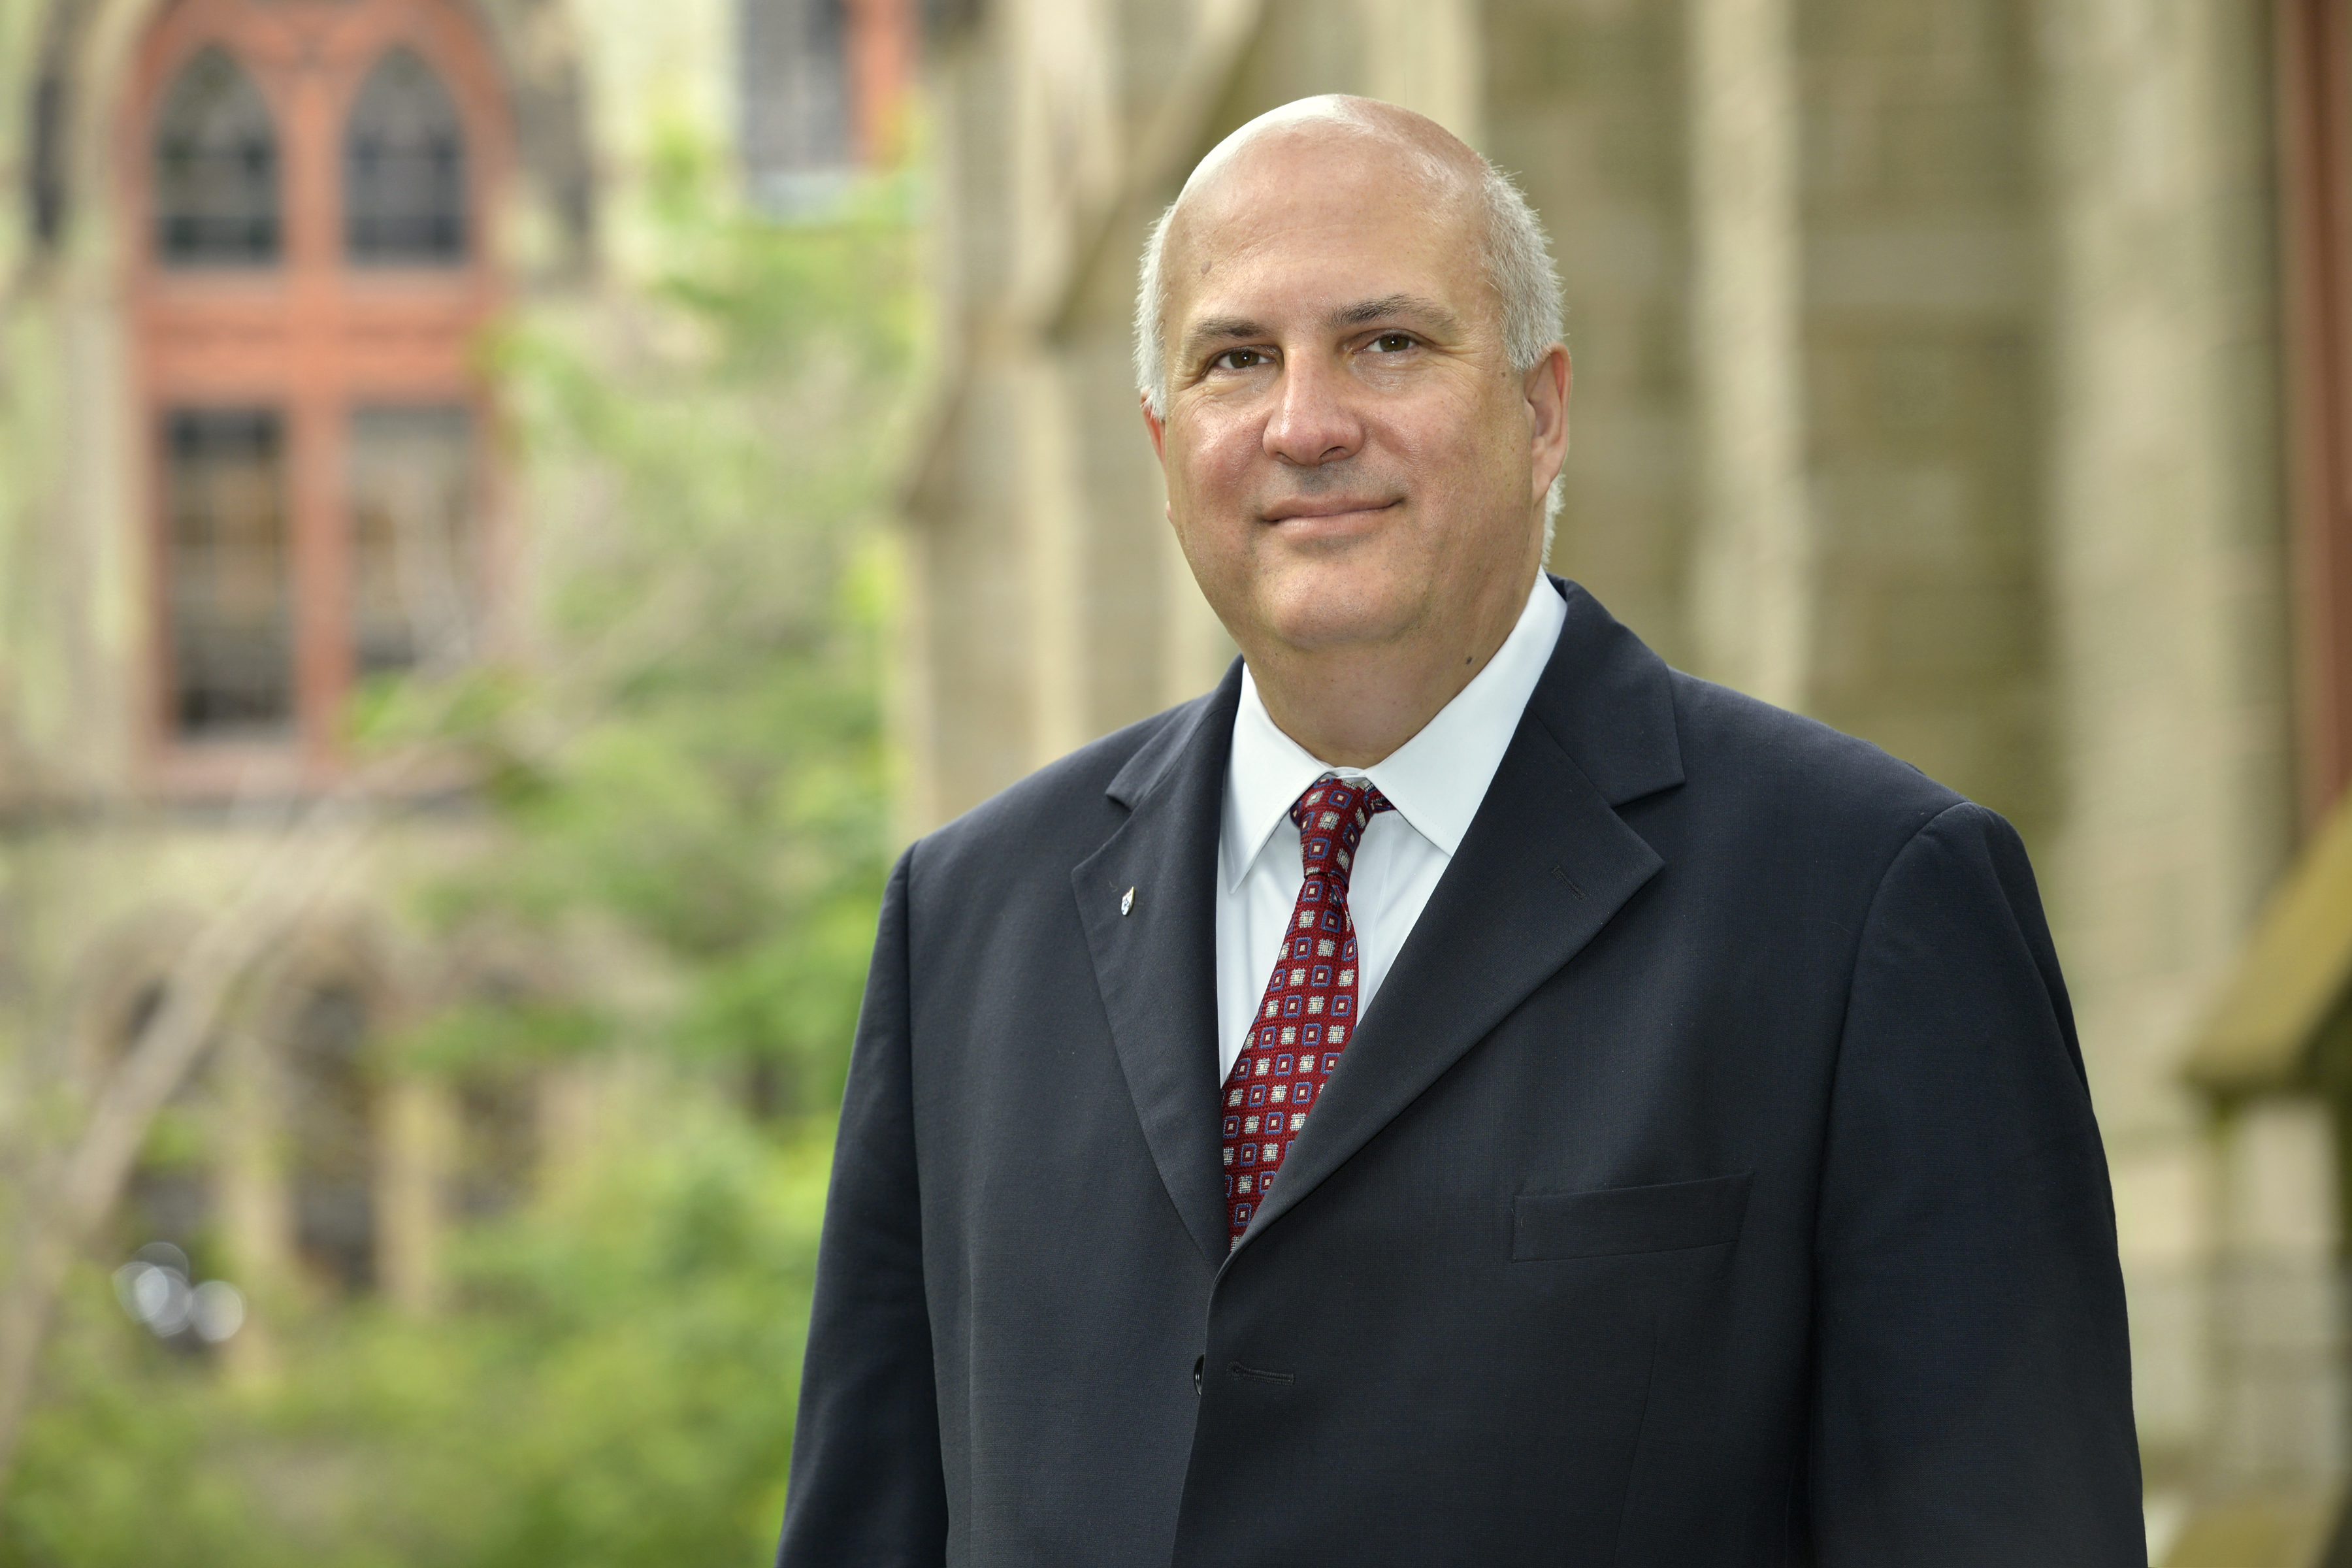 Craig Carnaroli, Penn's Executive Vice President